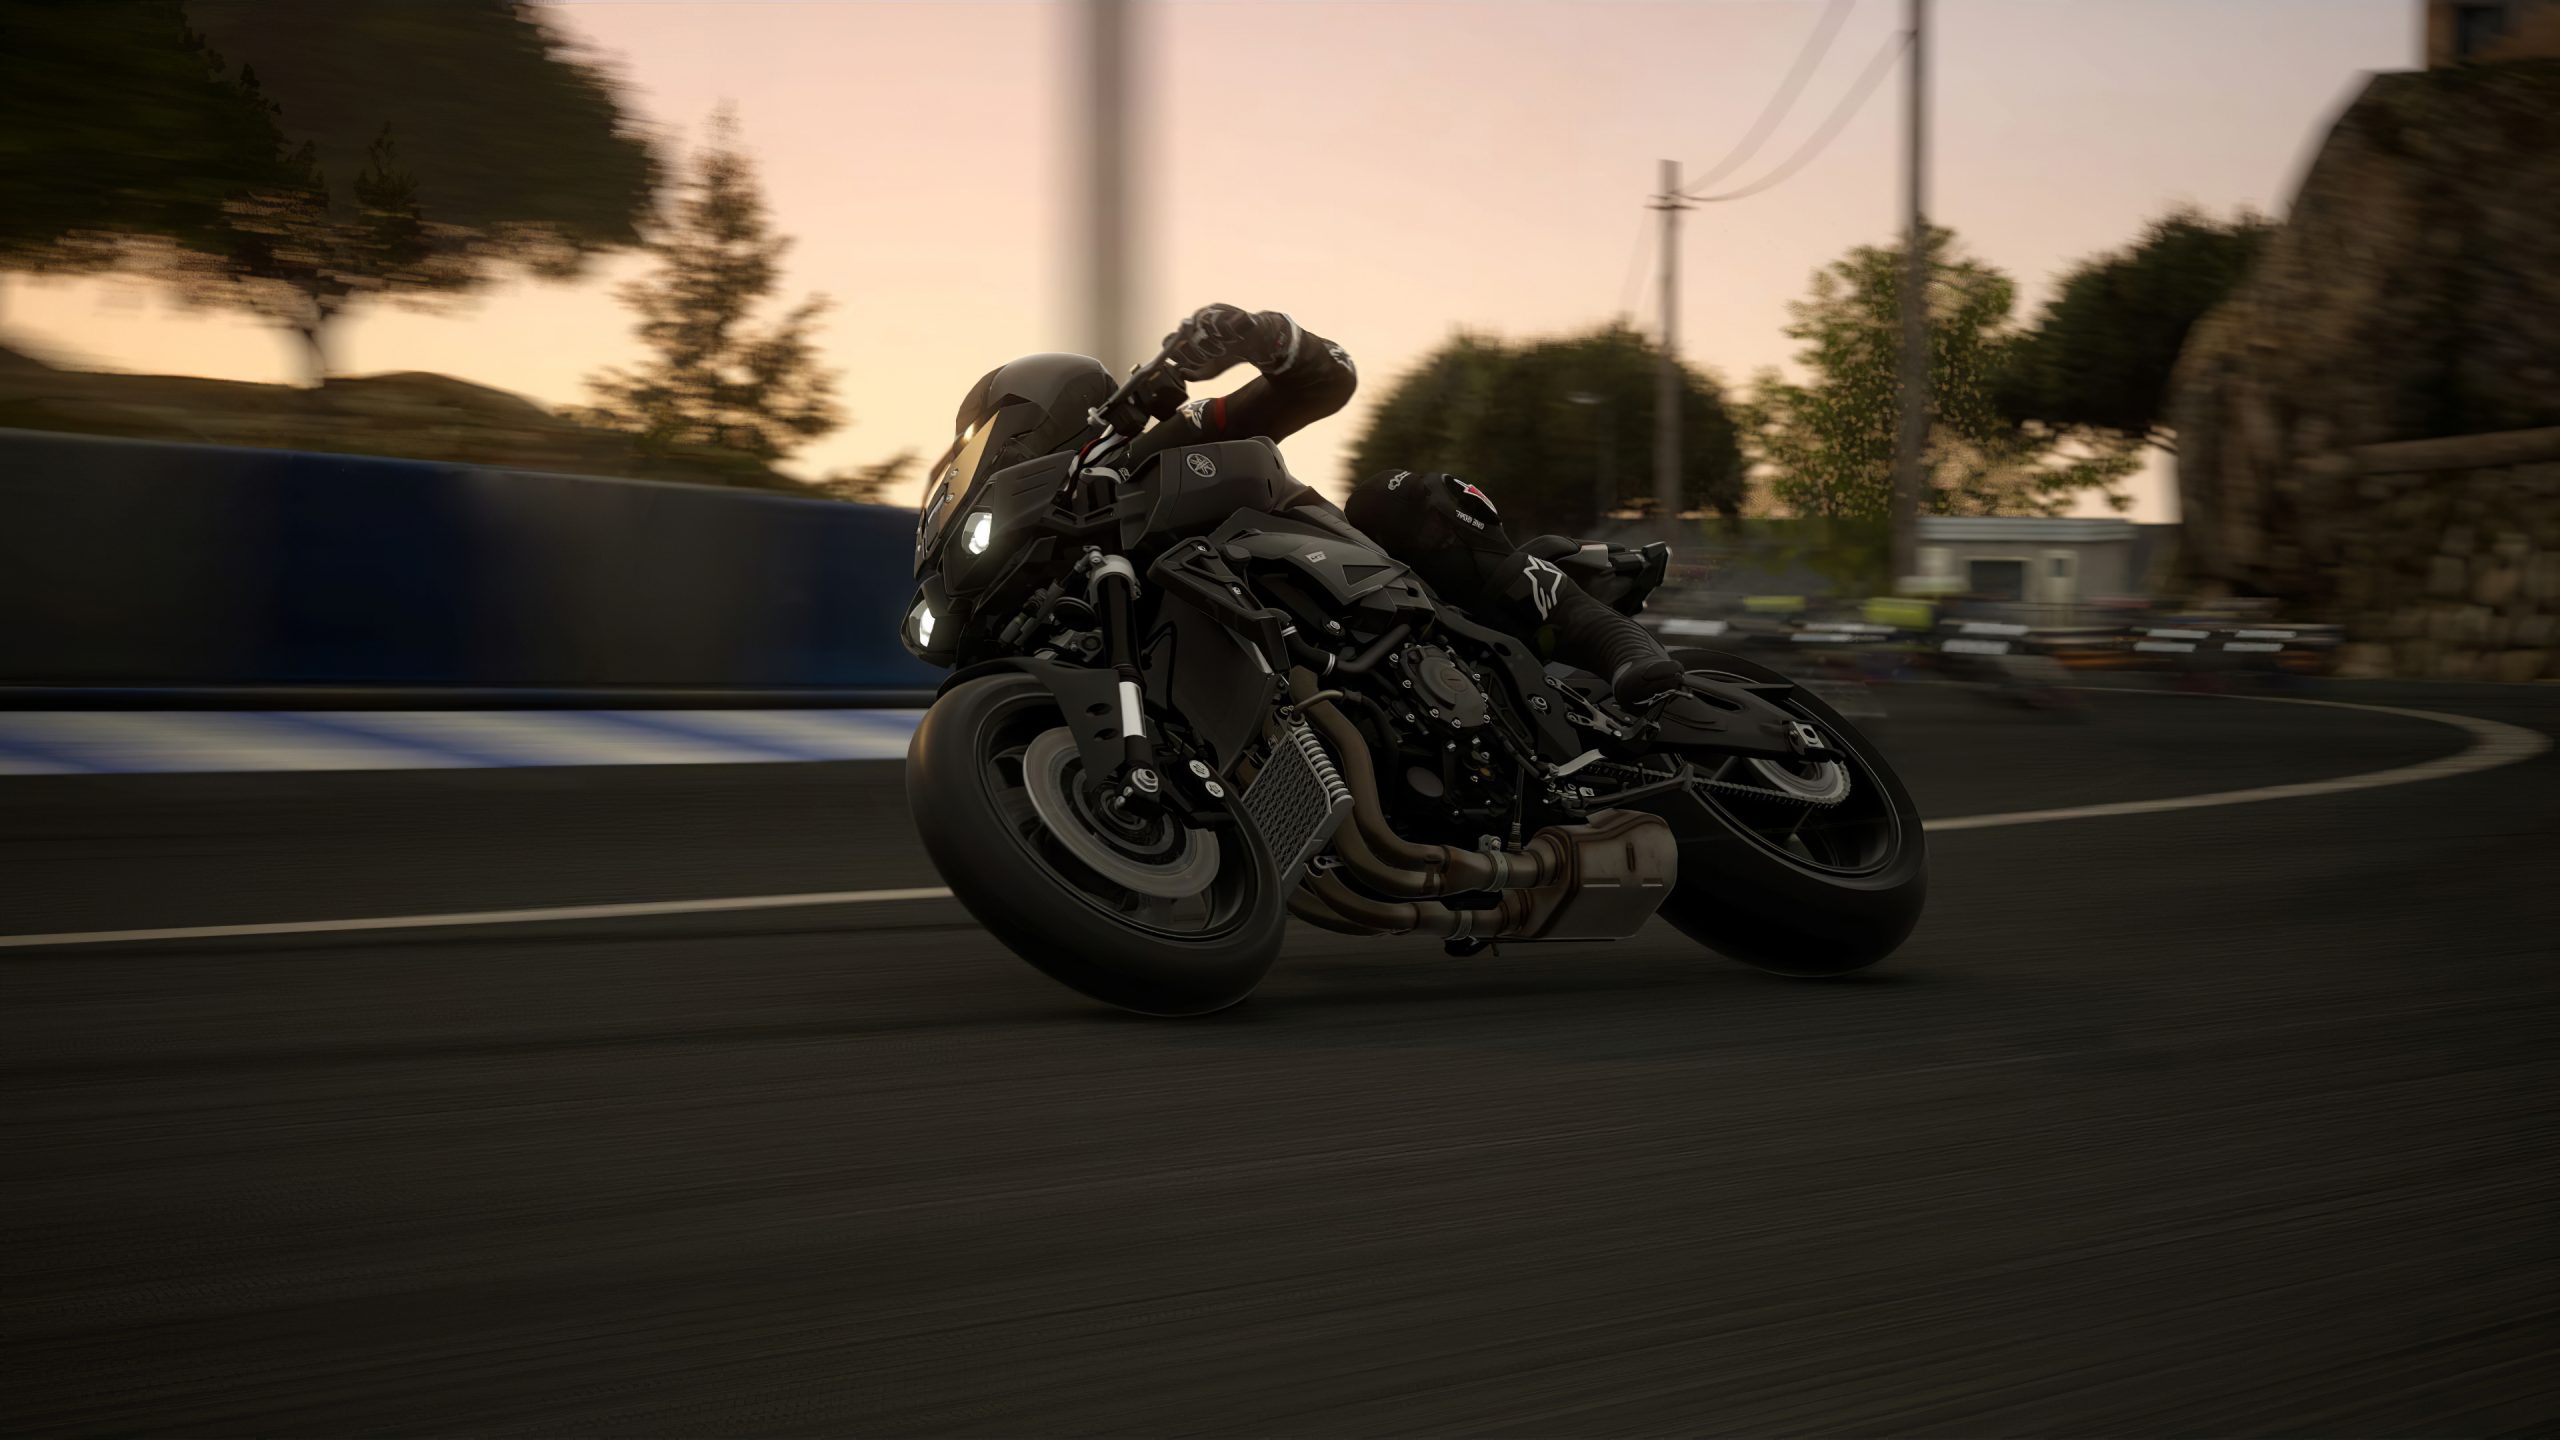 RIDE 4 motocycle game